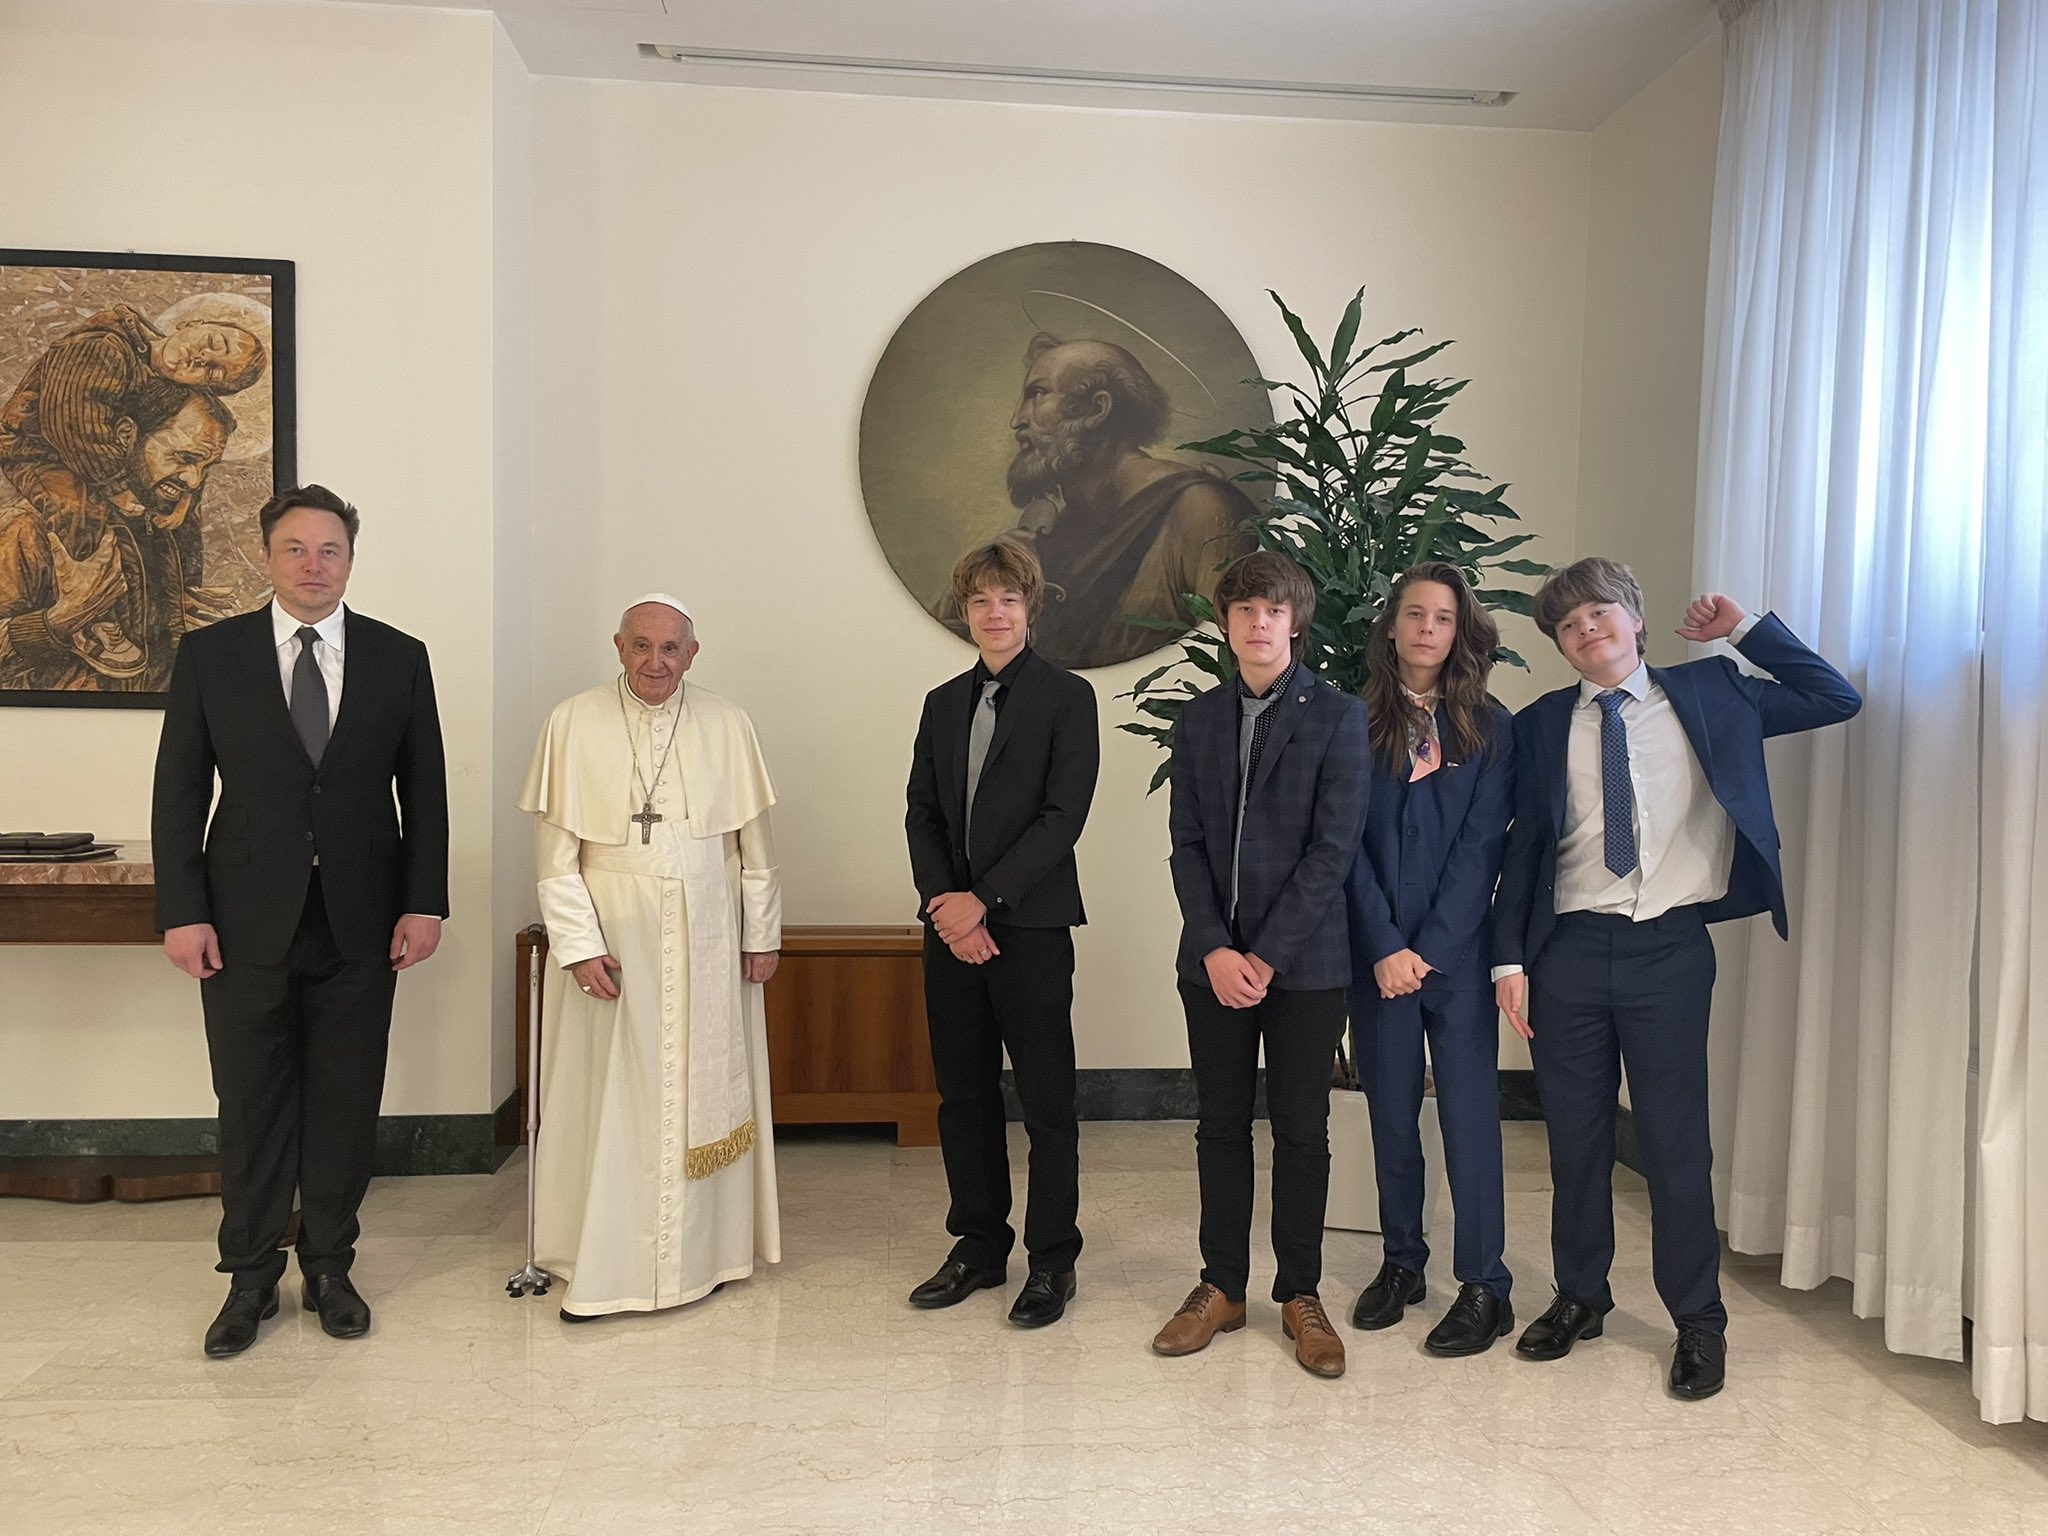 Elon Musk se manifestó honrado de conocer al papa Francisco